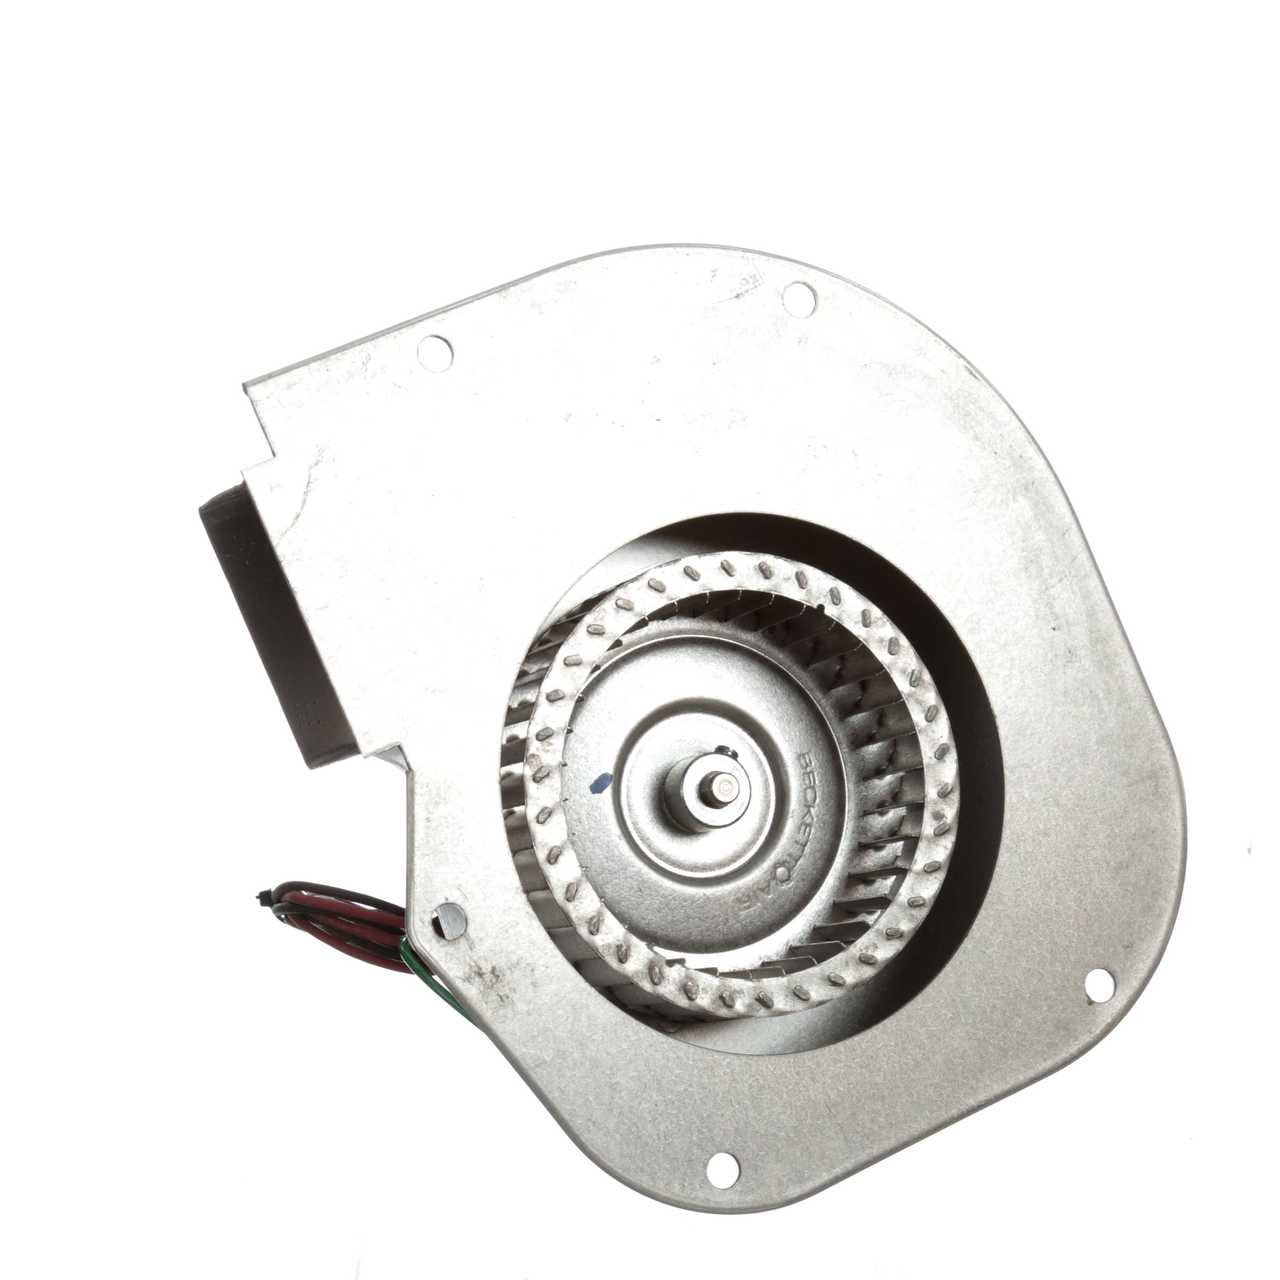 Fasco A150 Trane Furnace Draft Inducer Blower (X38080029010) 208-230 Volts